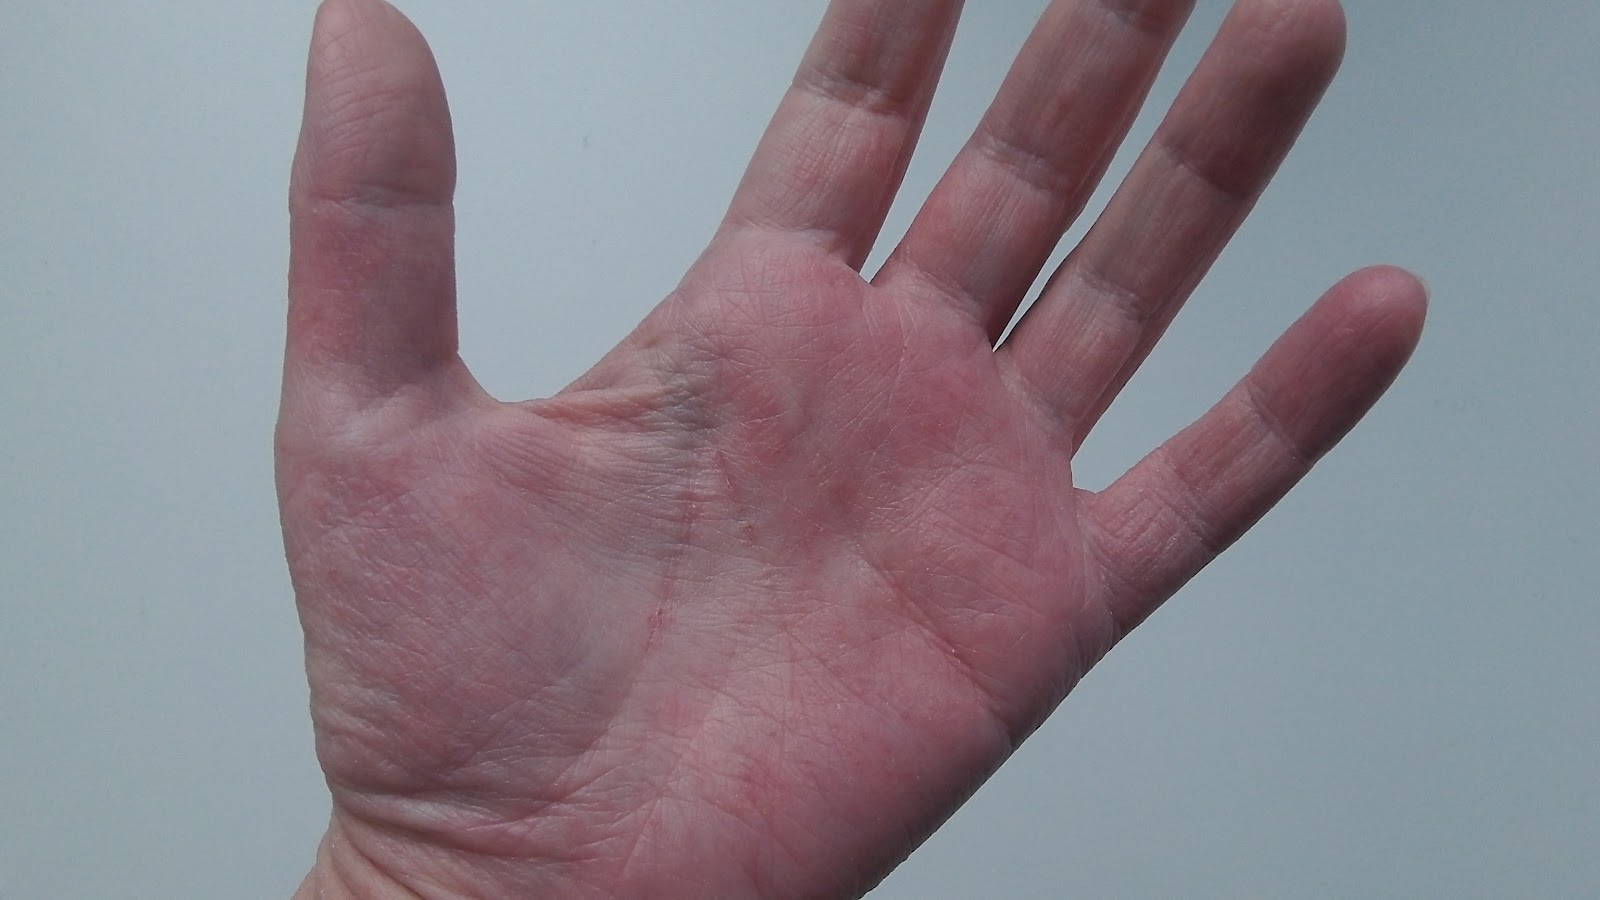 Tiny Red Dots On Palms - Dermatology - MedHelp